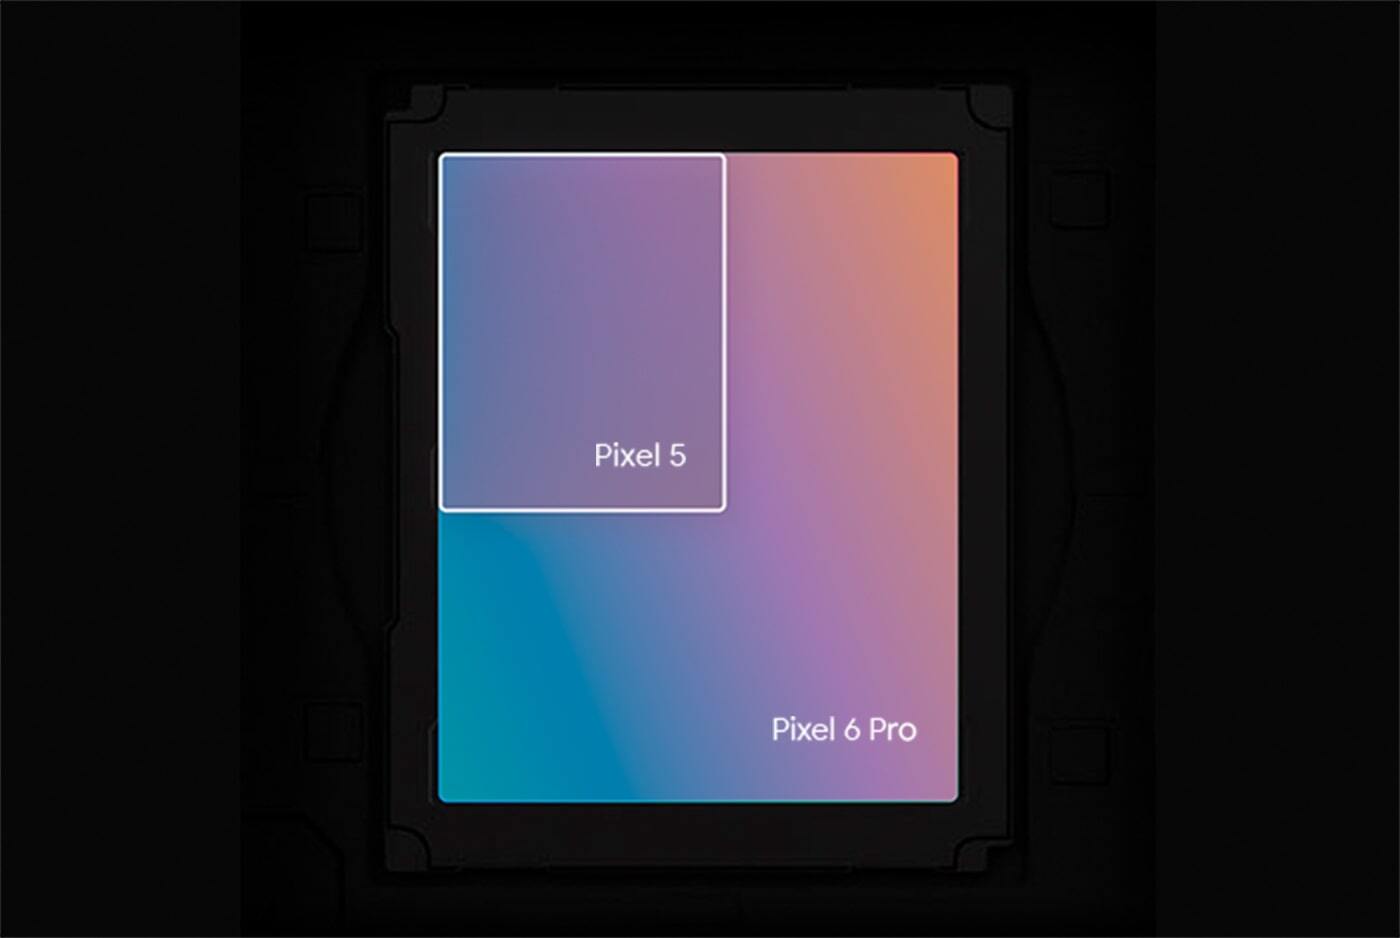 Pixel 6 finally gets new camera sensors - Press material leak: Pixel 6 is 80 percent faster than Pixel 5, thanks to Google Tensor